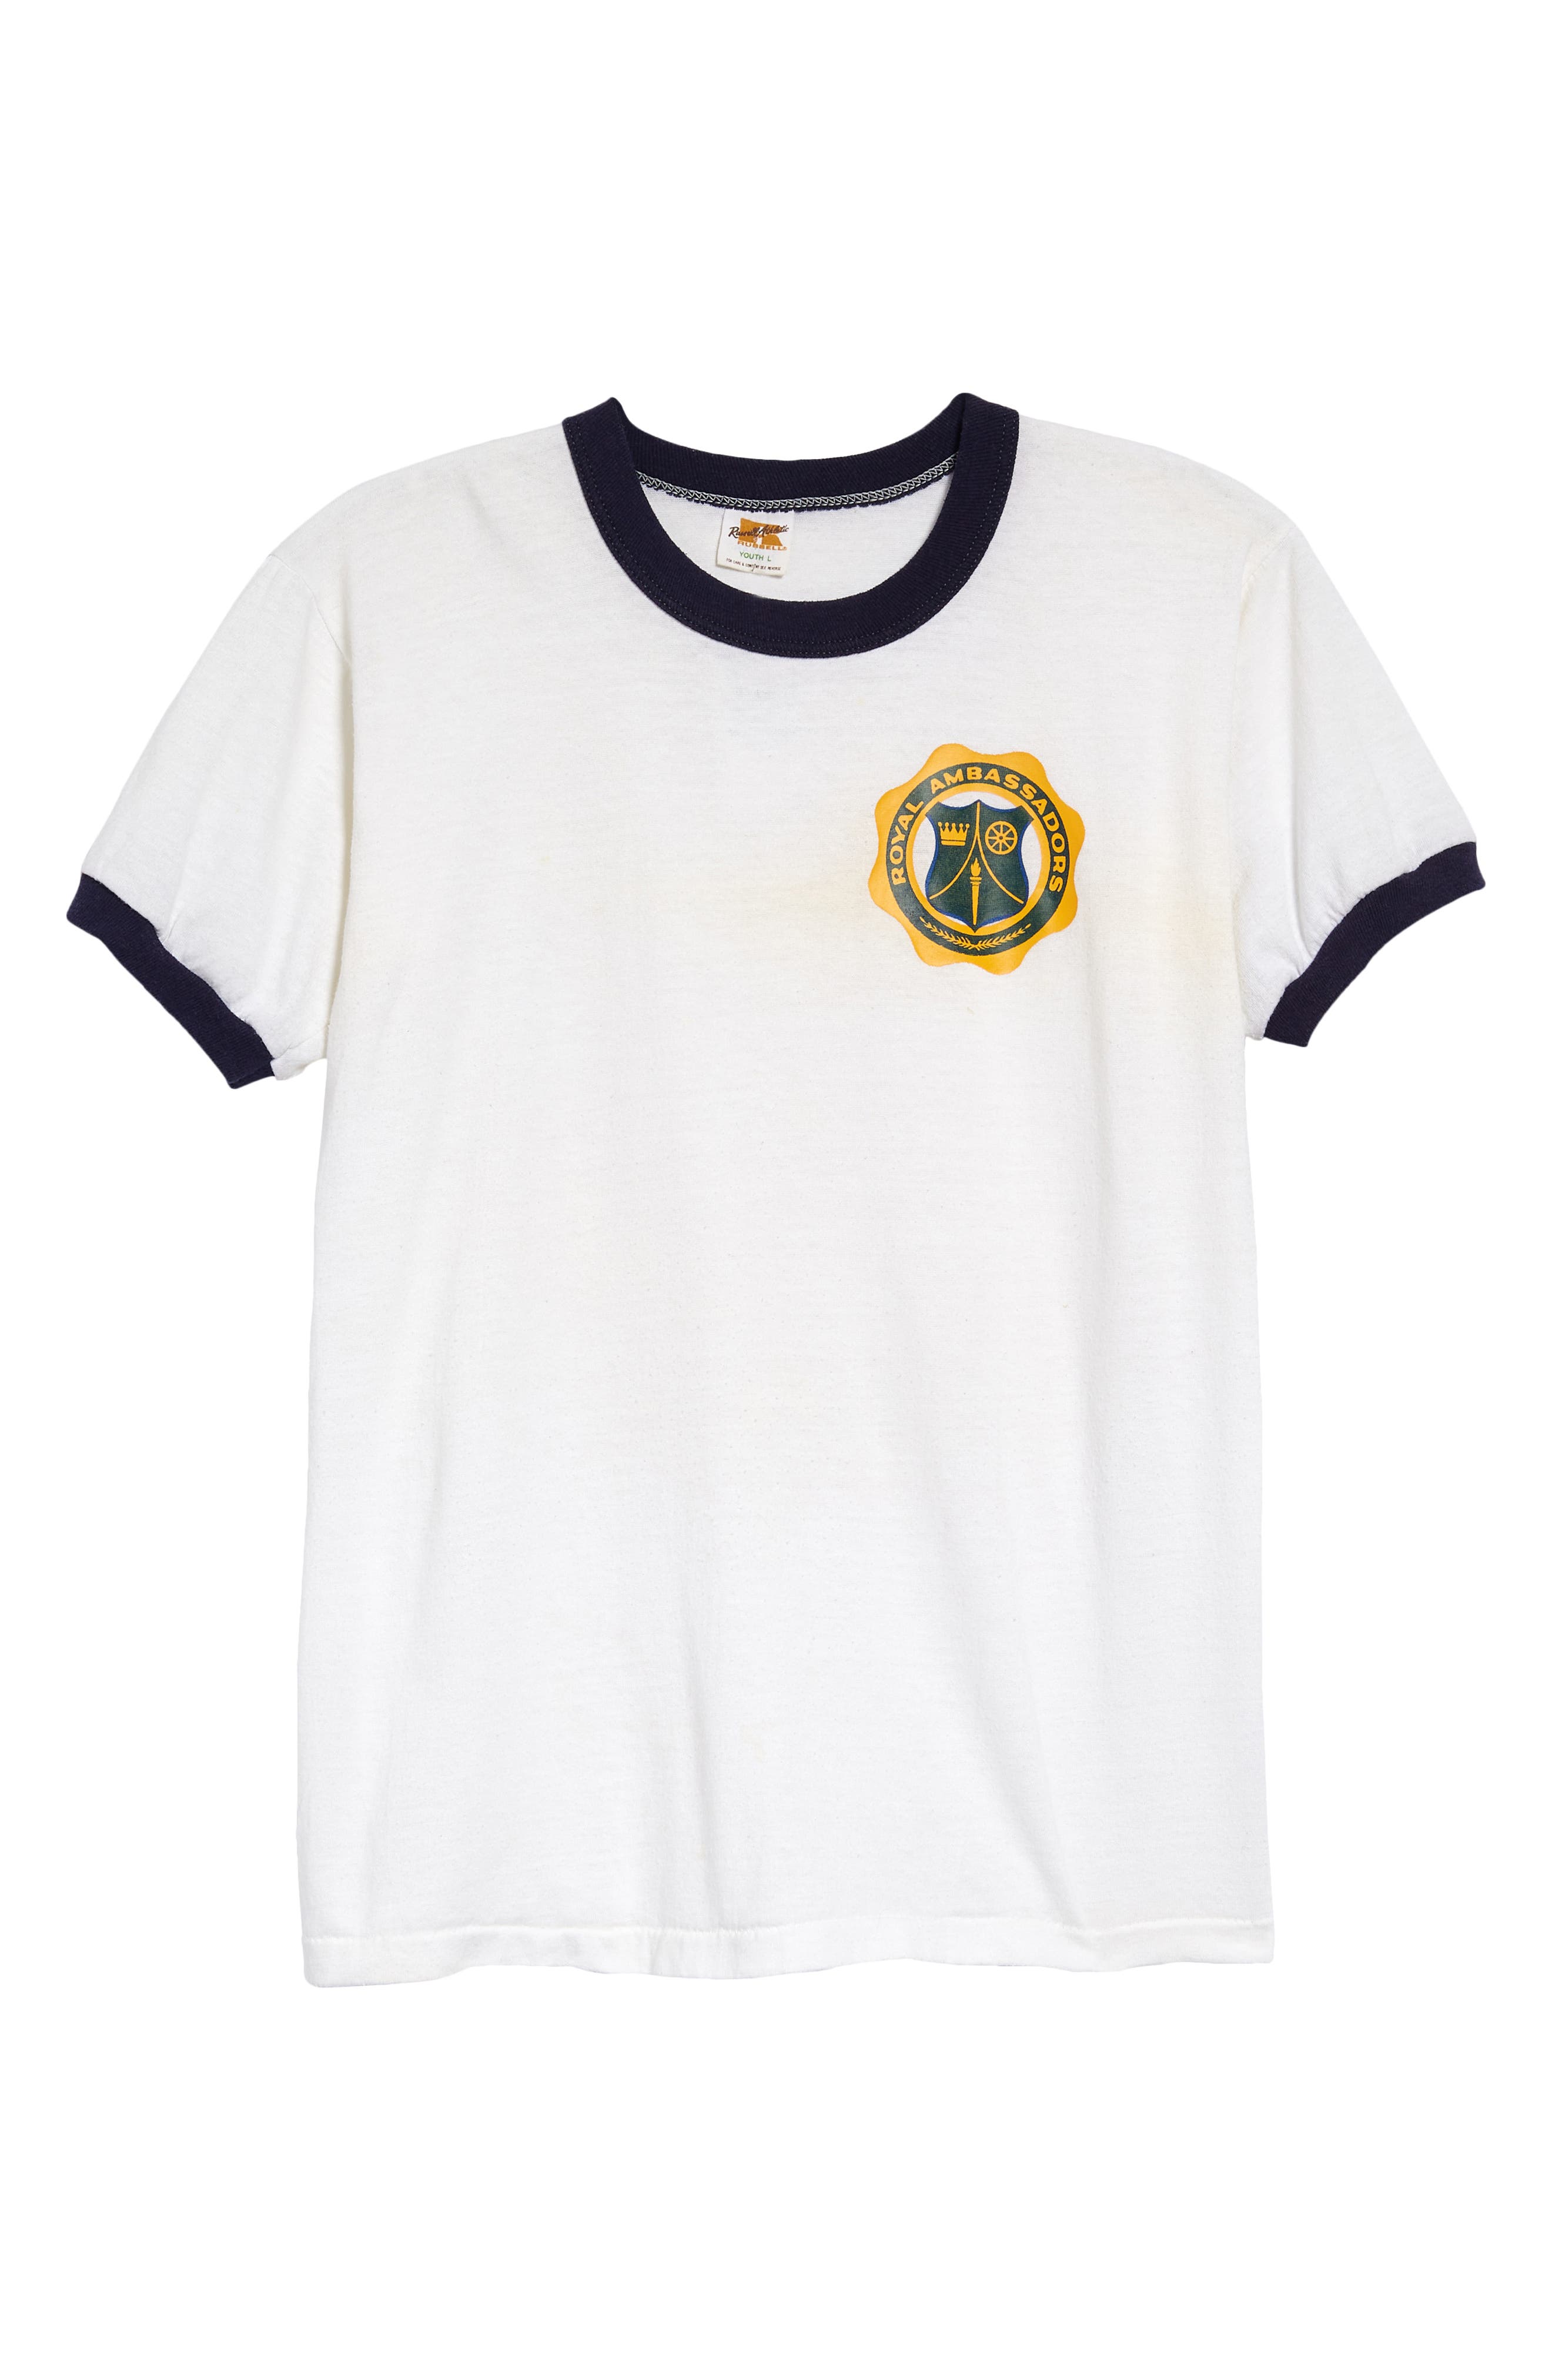 Vintage Mens Shirt Bon Soir 80s Shirt Size XL